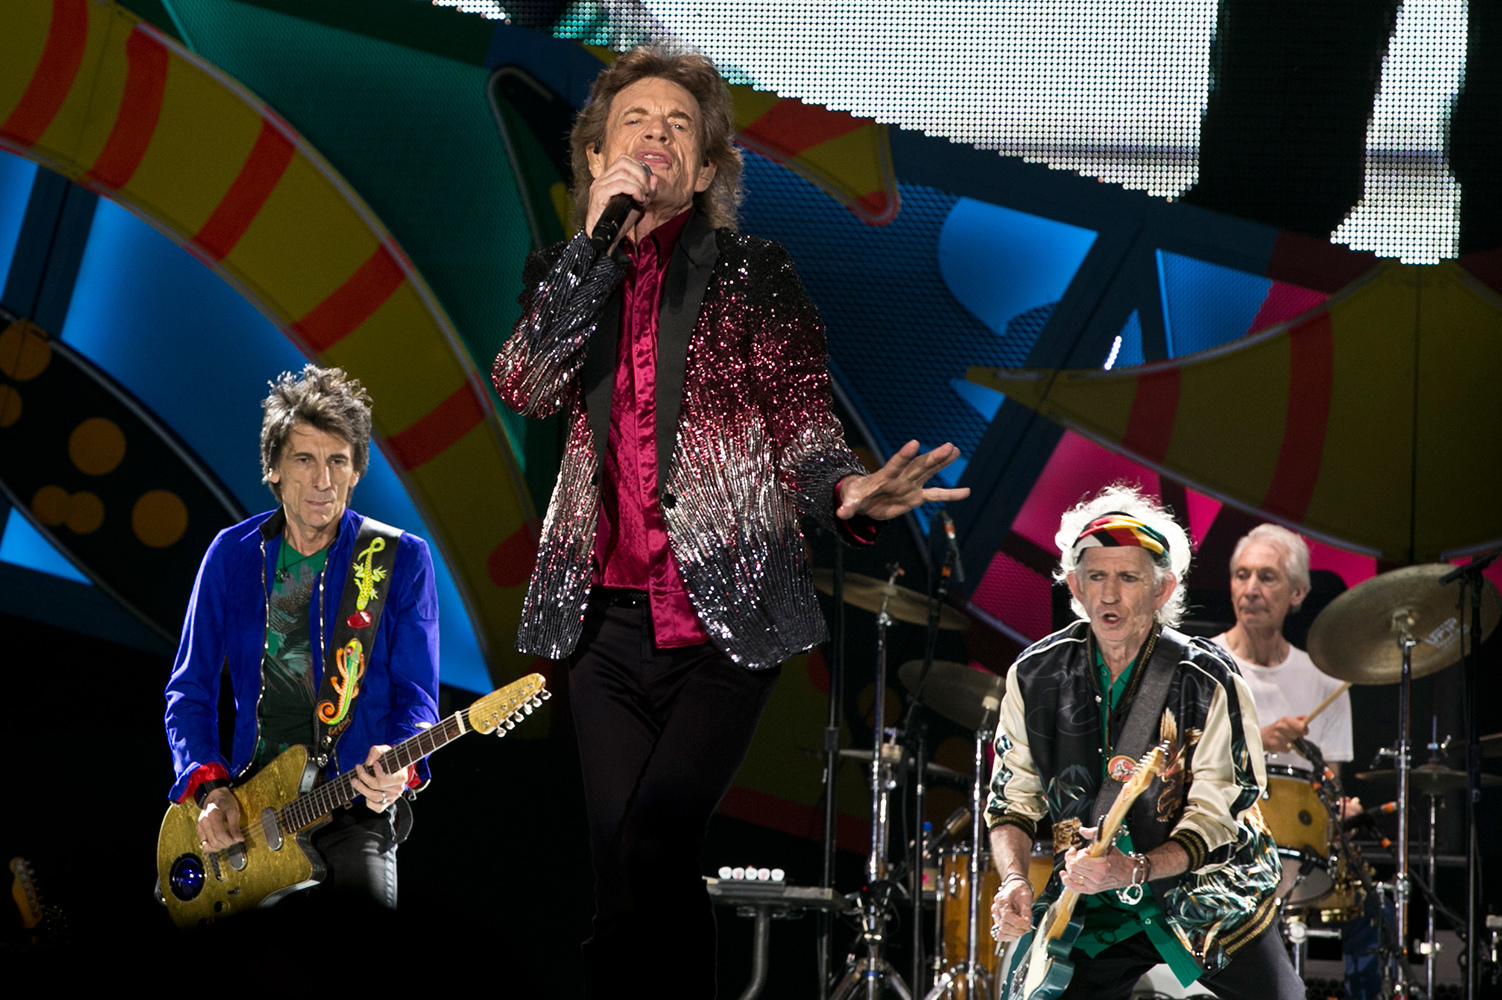 Группа The Rolling Stones представила музыкальное видео на ранее неизданную песню Scarlet